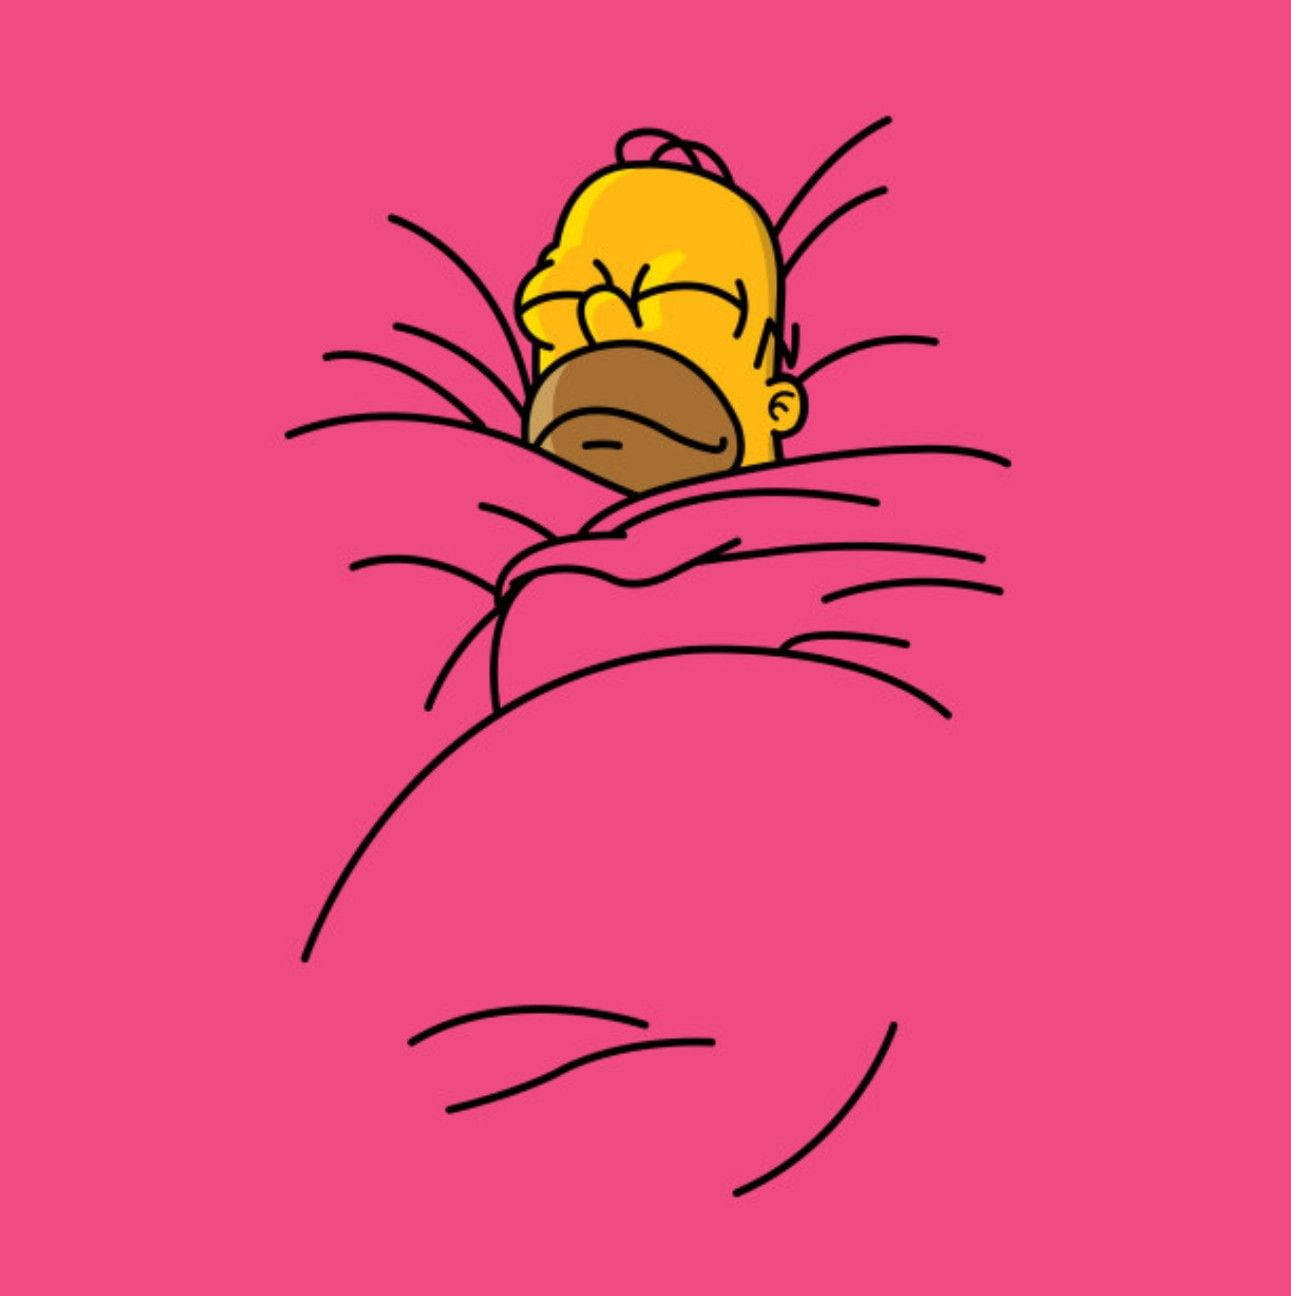 Sleeping Homer Simpson Wallpaper